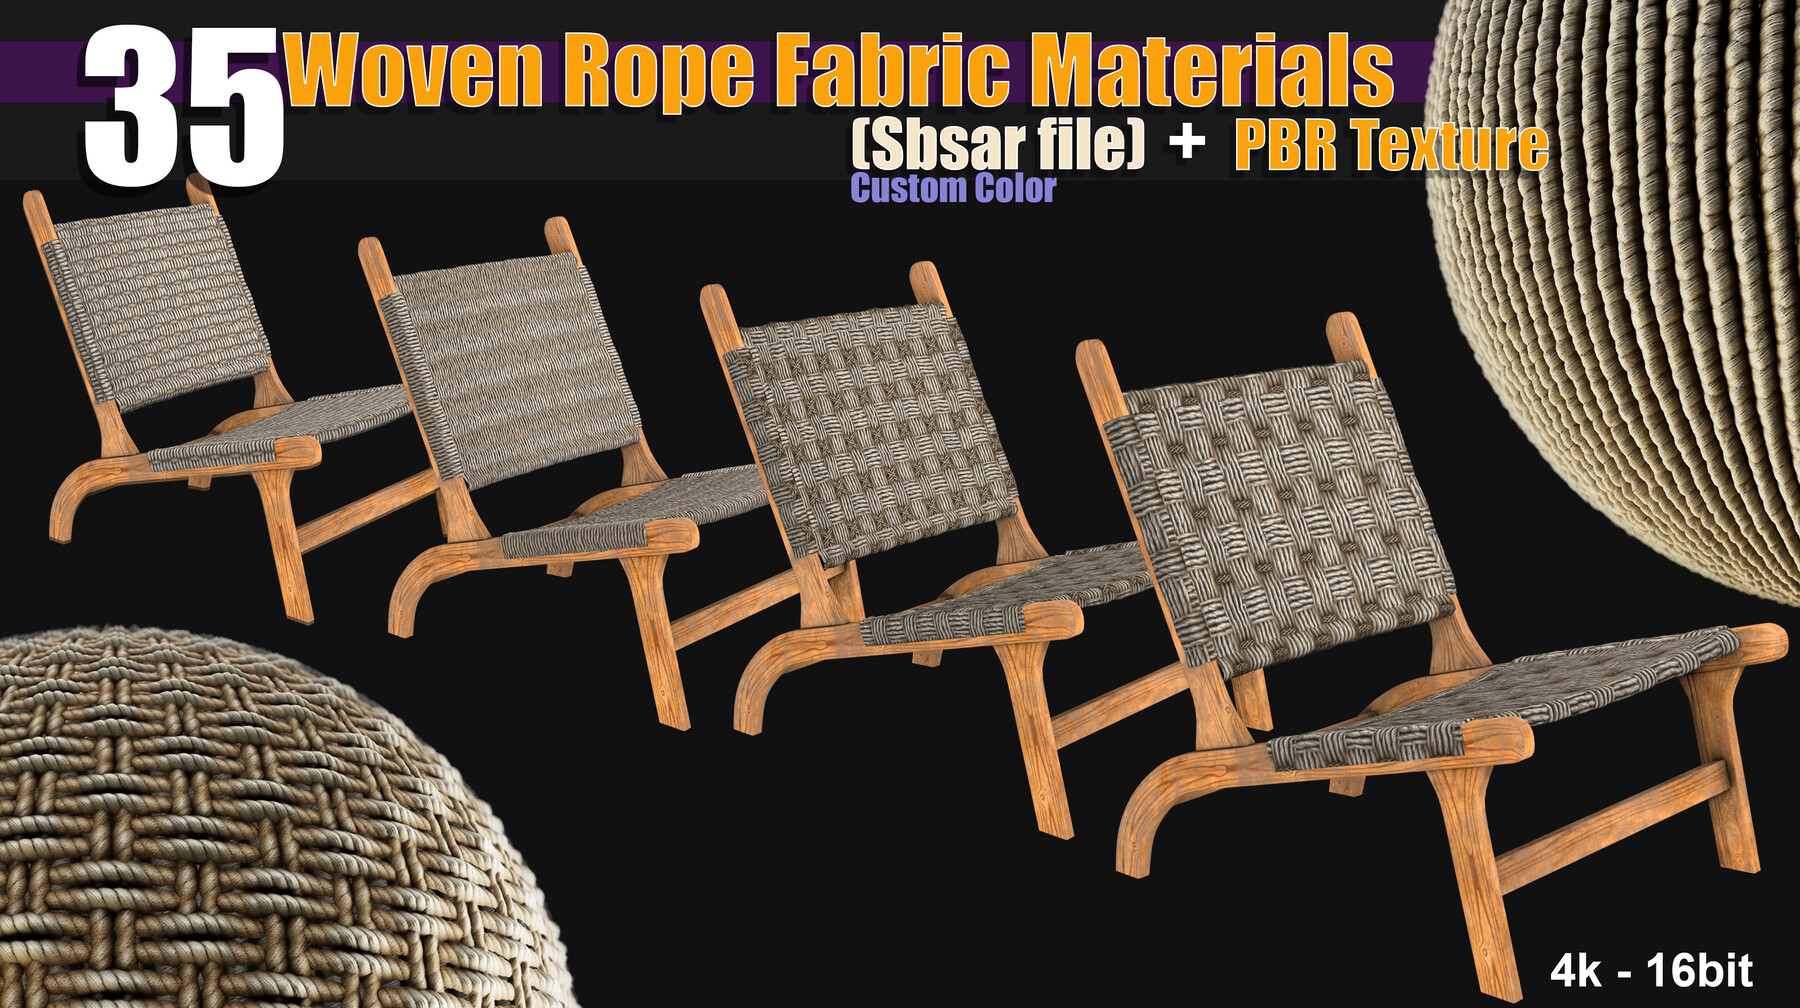 ArtStation - 35 Woven Rope Fabric Materials